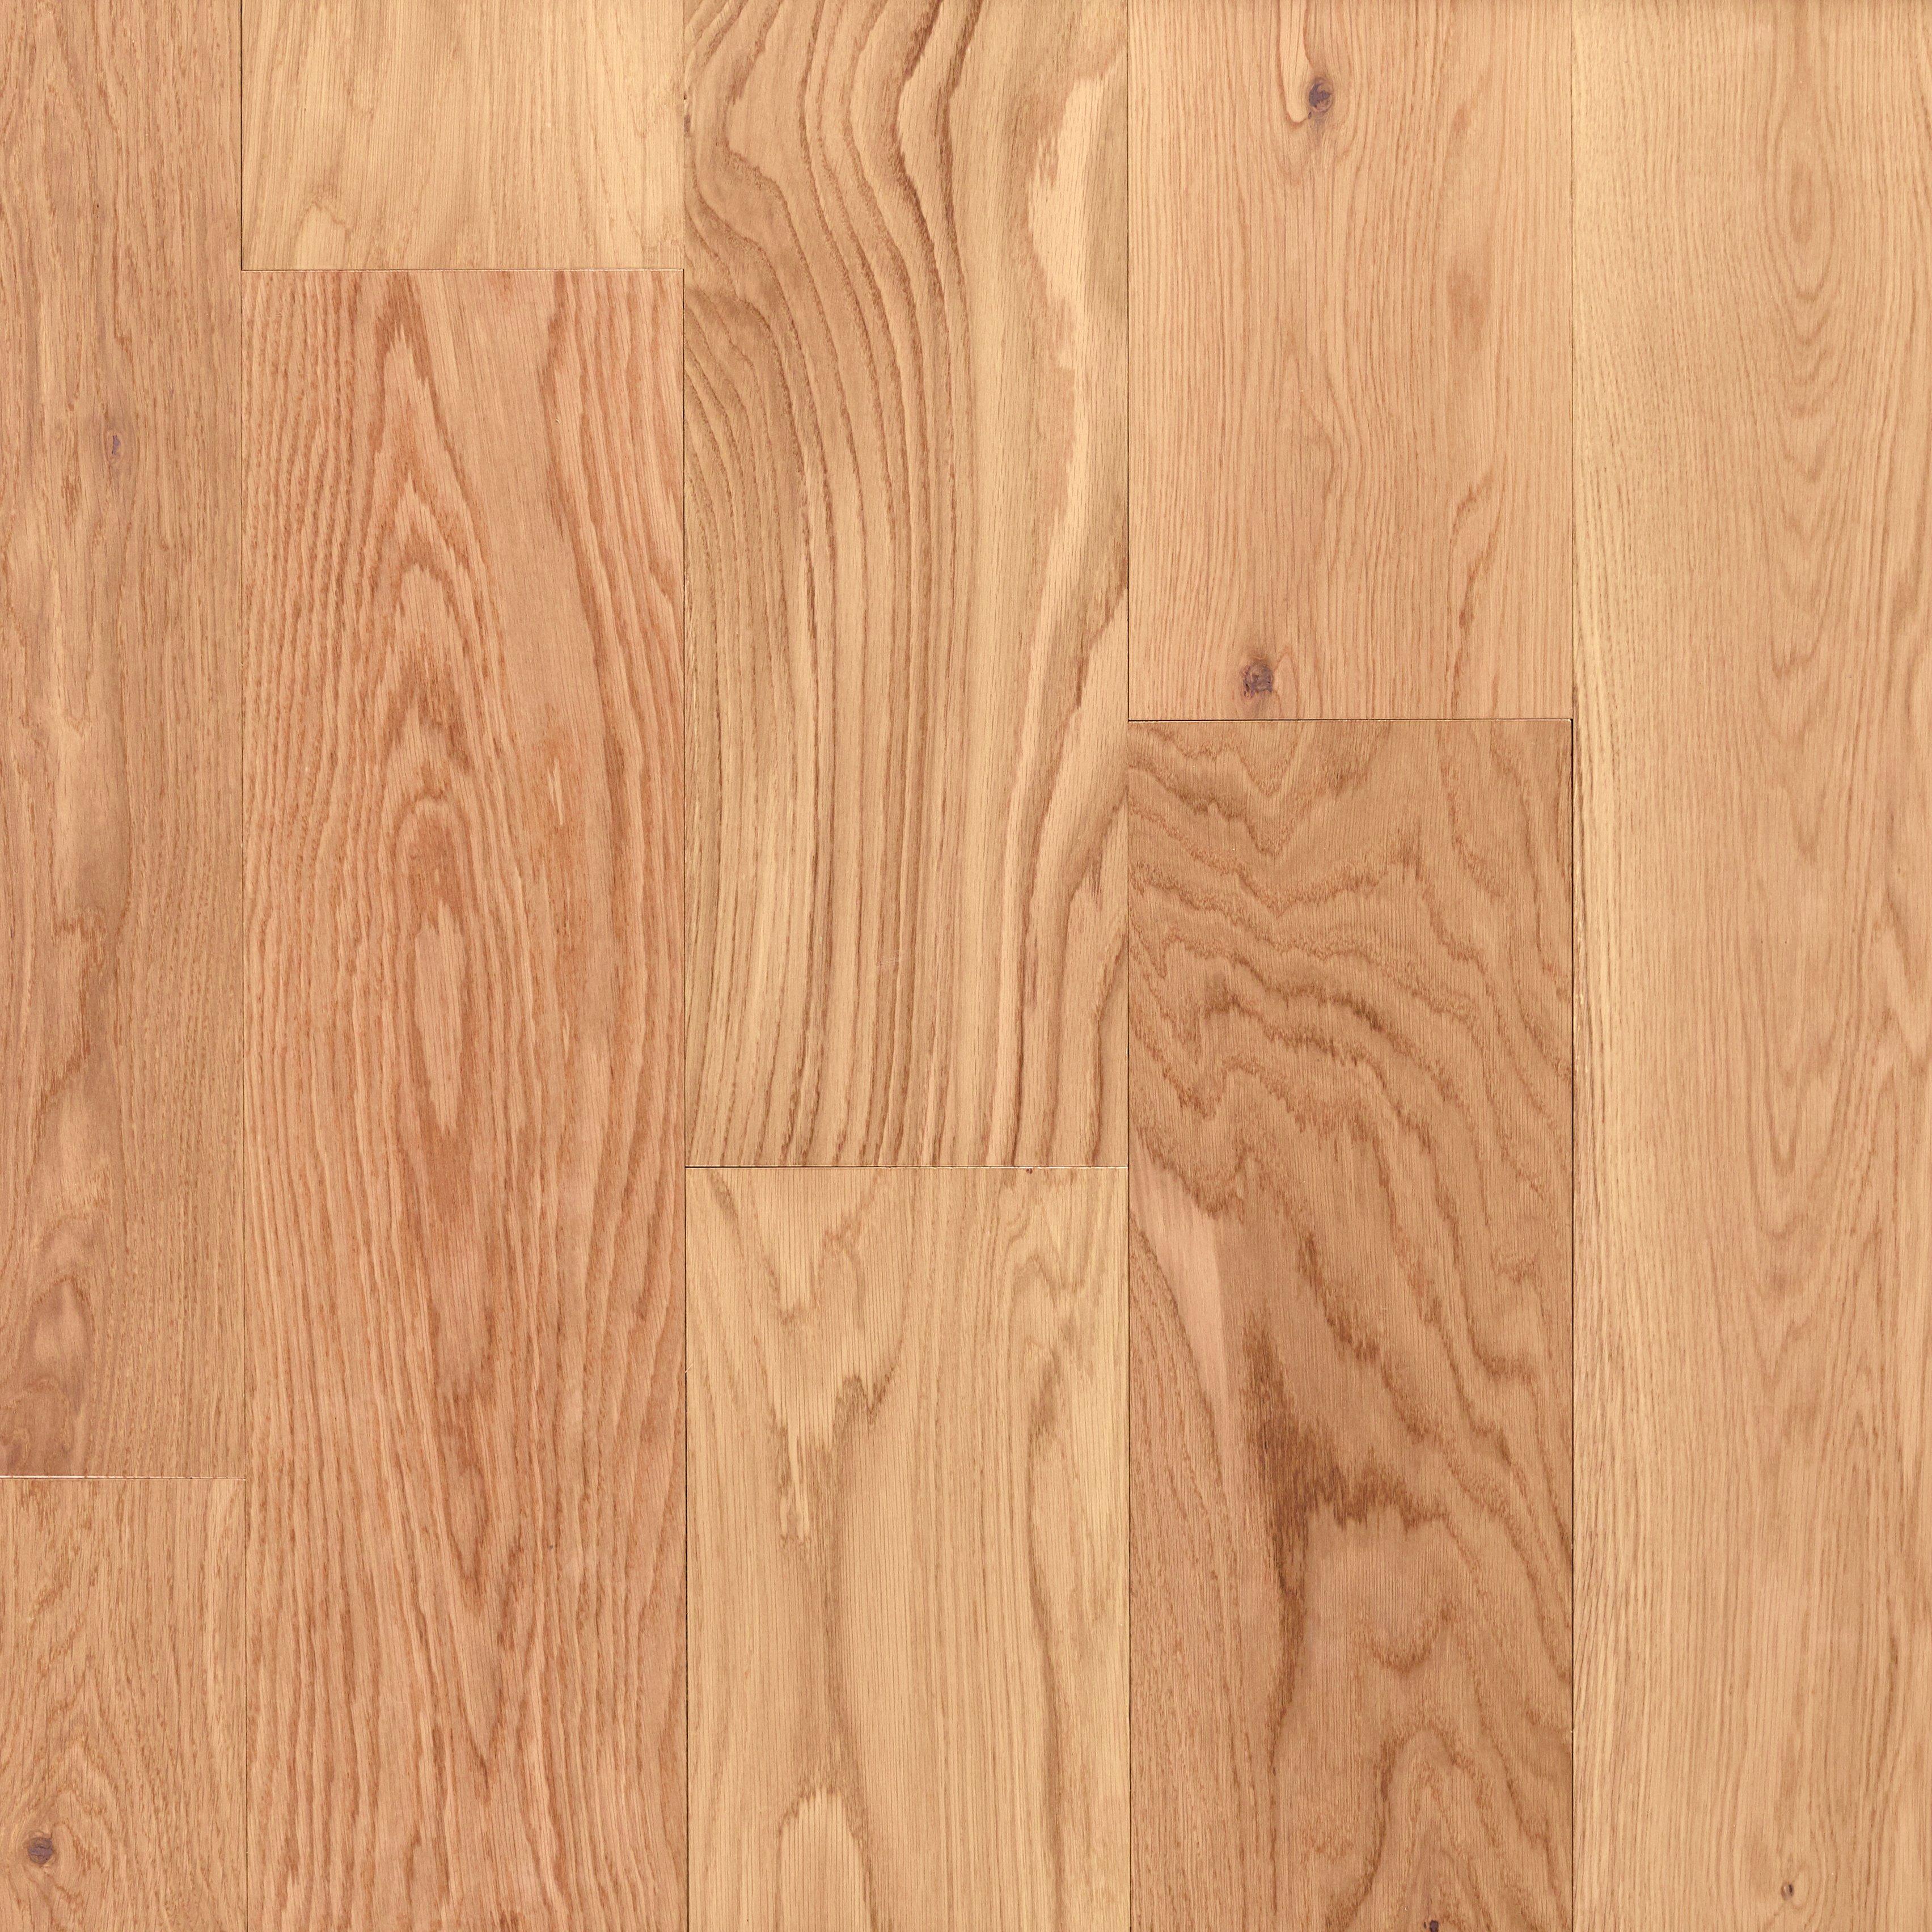 Cirrus White Oak Wire Brushed, Floor And Decor Hardwood Flooring